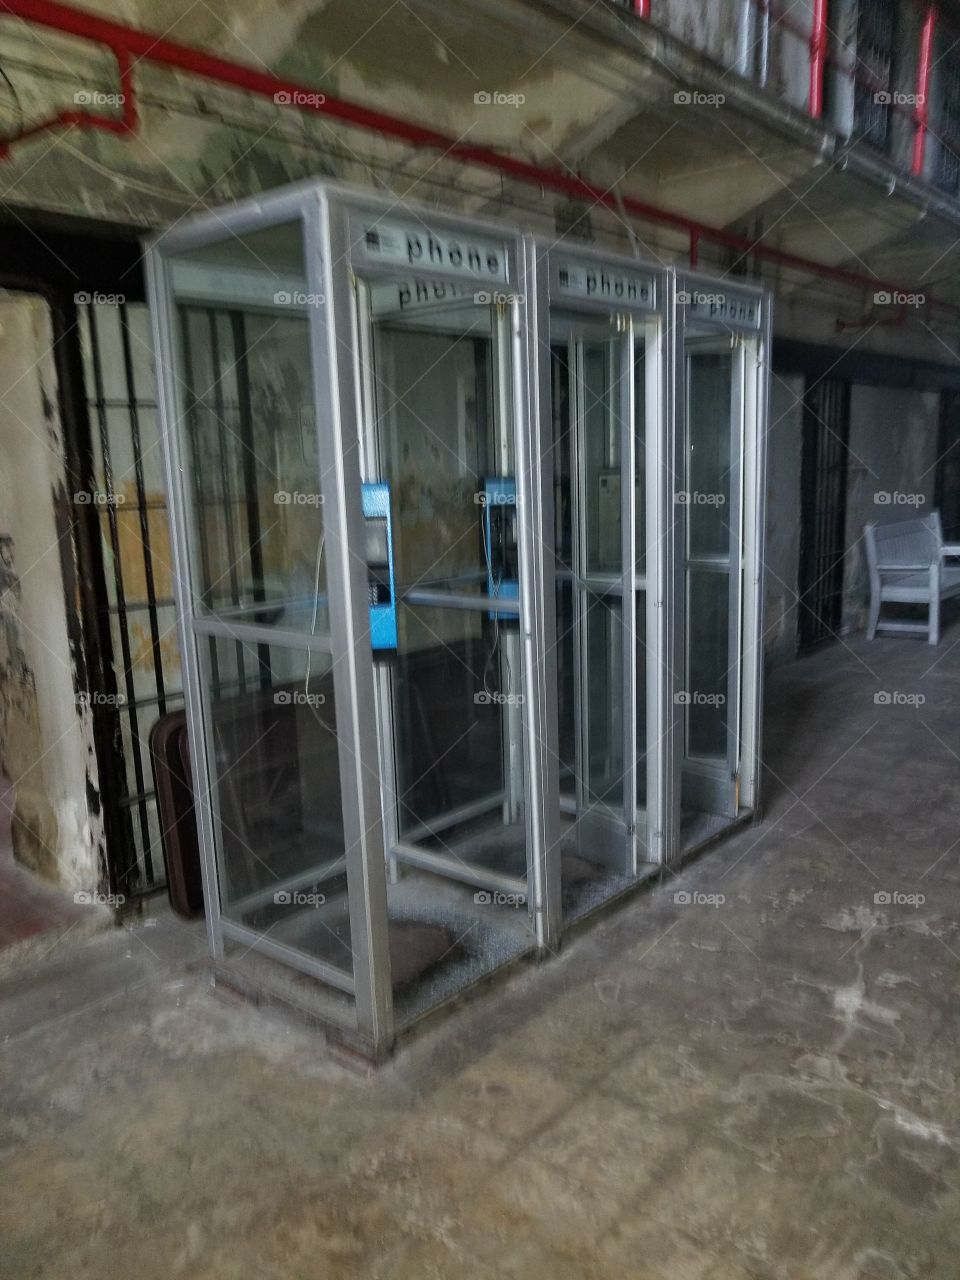 retro phone booths